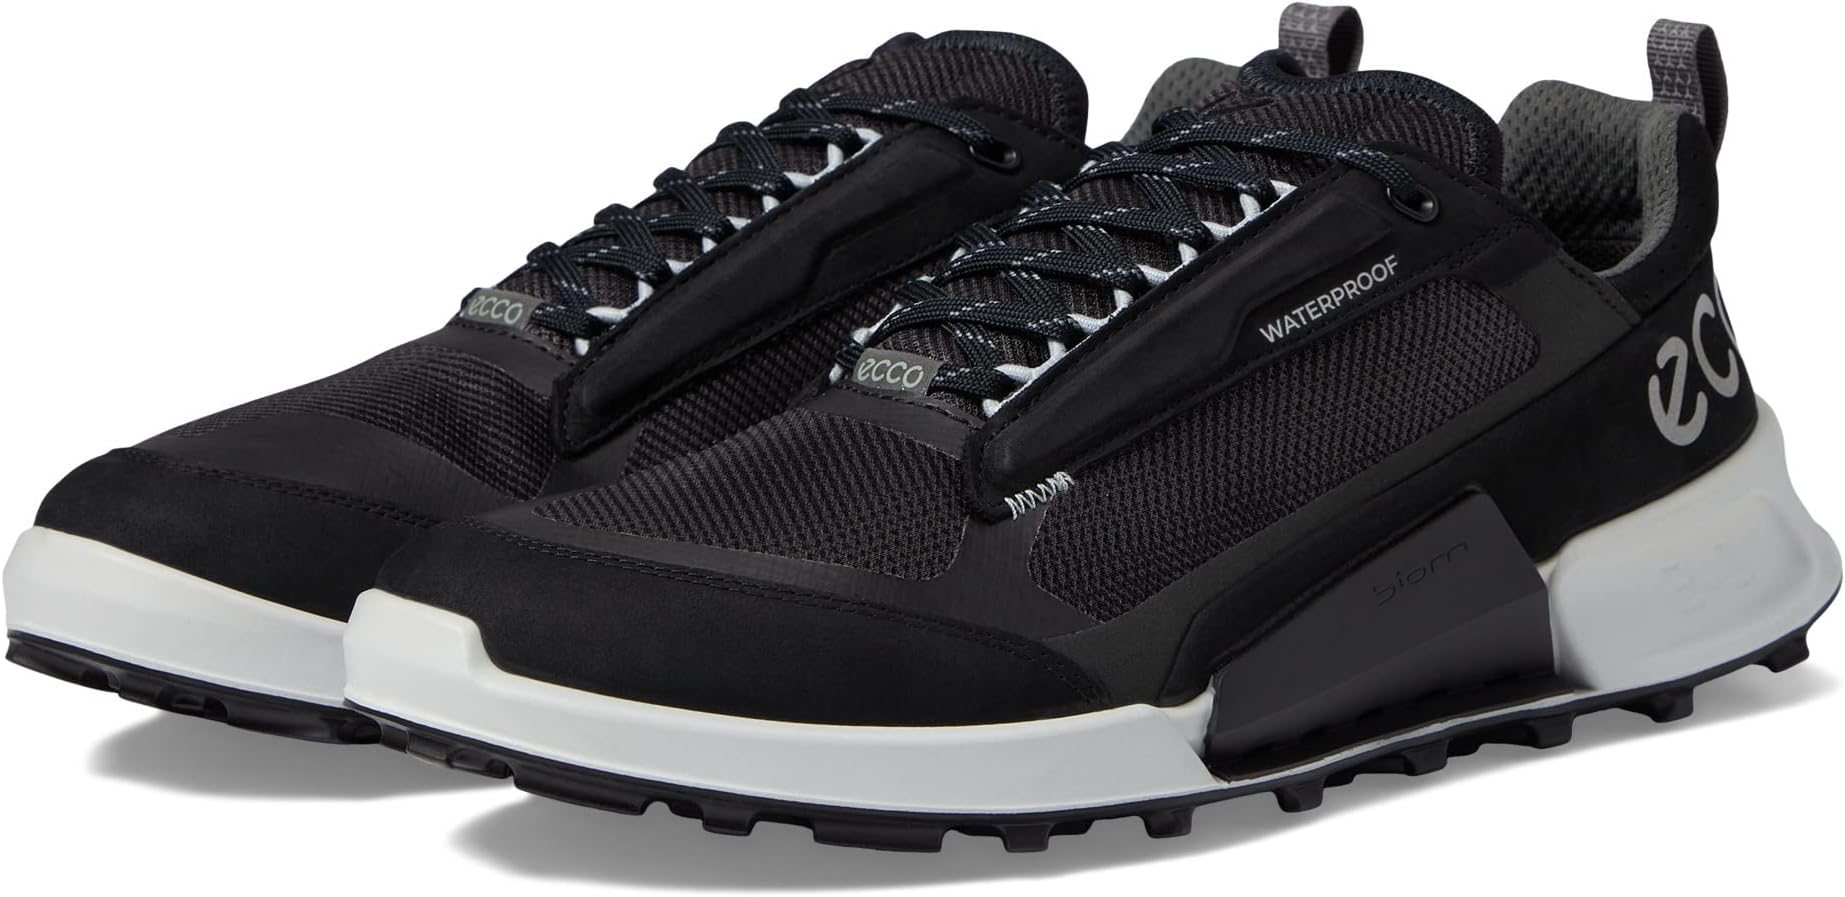 Походная обувь водонепроницаемая BIOM 2.1 X MTN Waterproof Low Sneaker ECCO Sport, цвет Black/Magnet/Black аккумулятор для моделей mosquito magnet independence и black kill м3000